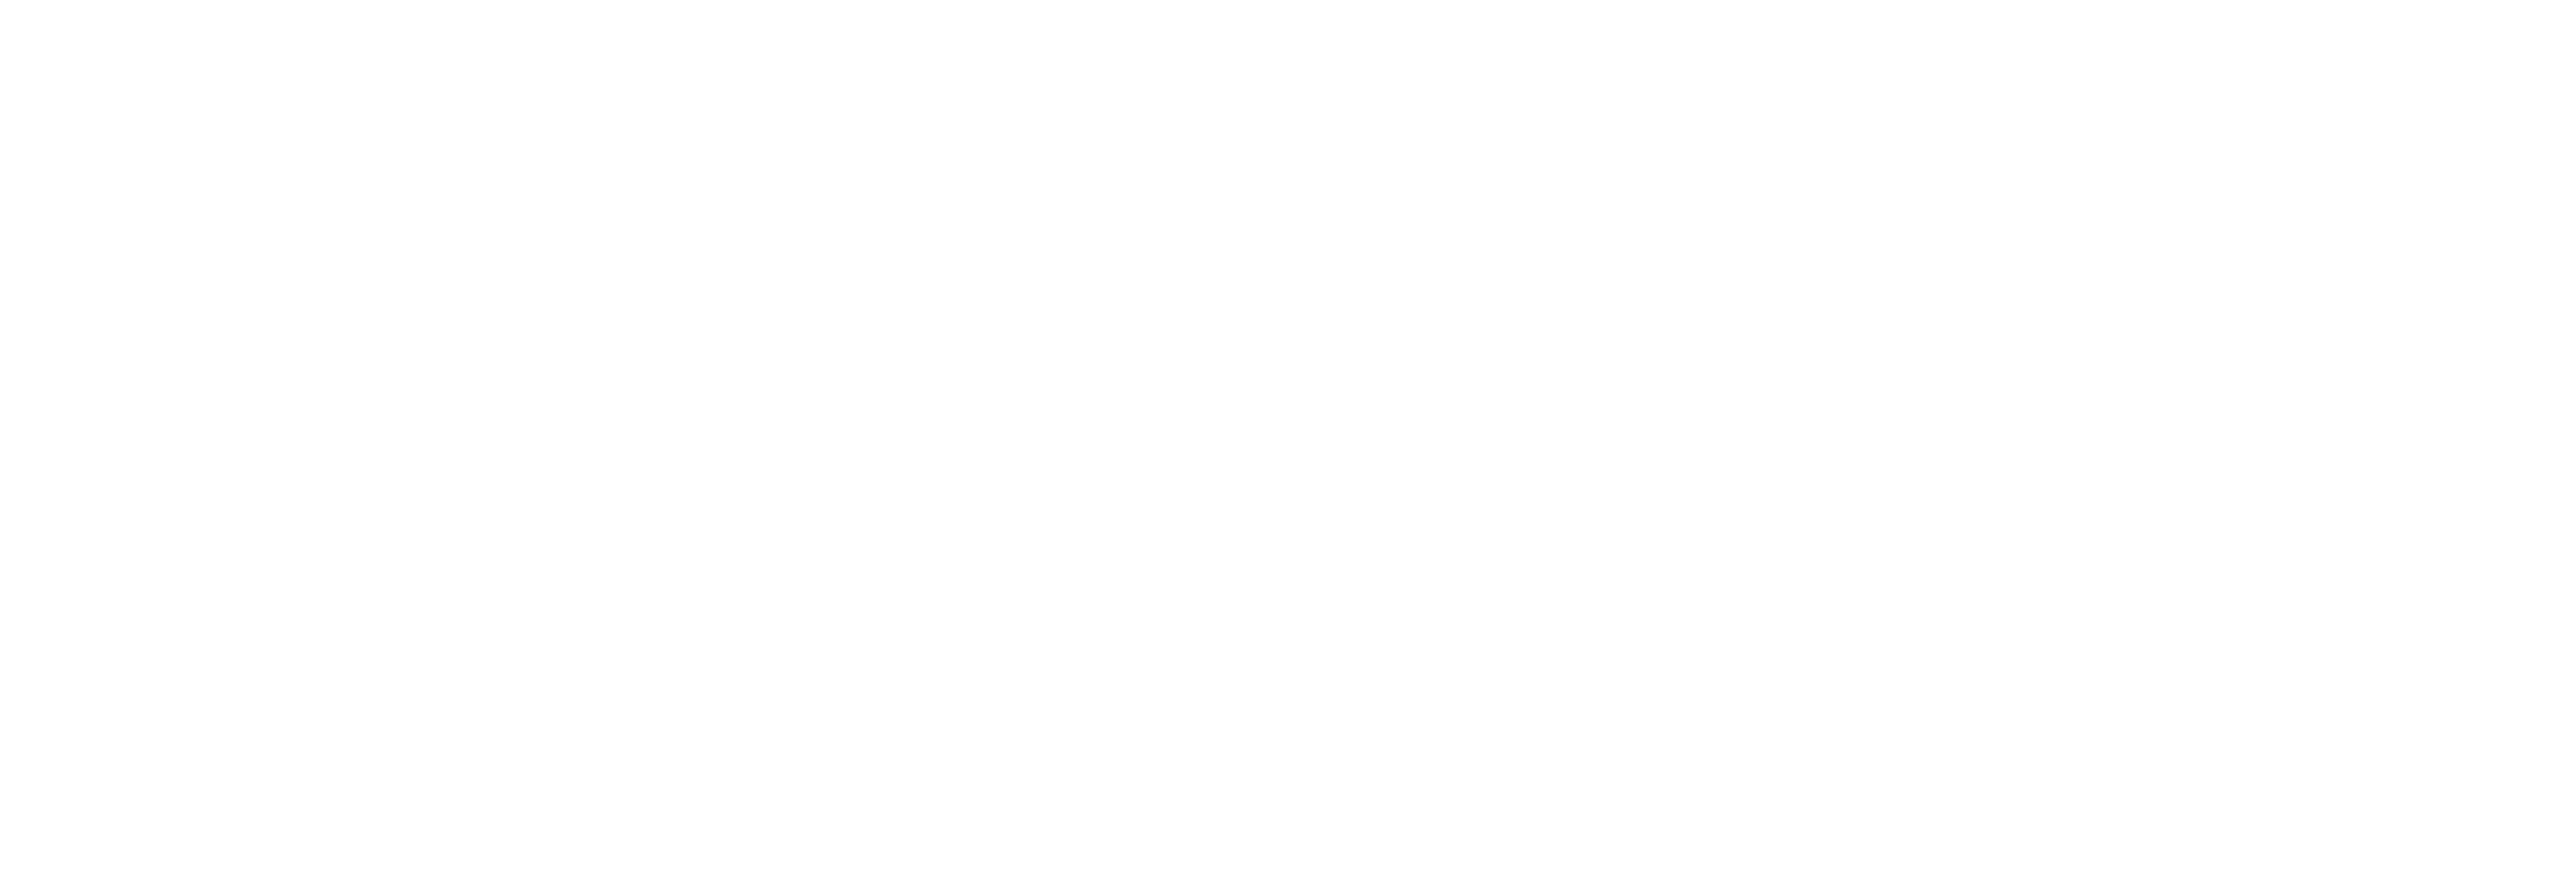 AniCura Dierenartsenpraktijk Anthemis te Grimbergen logo